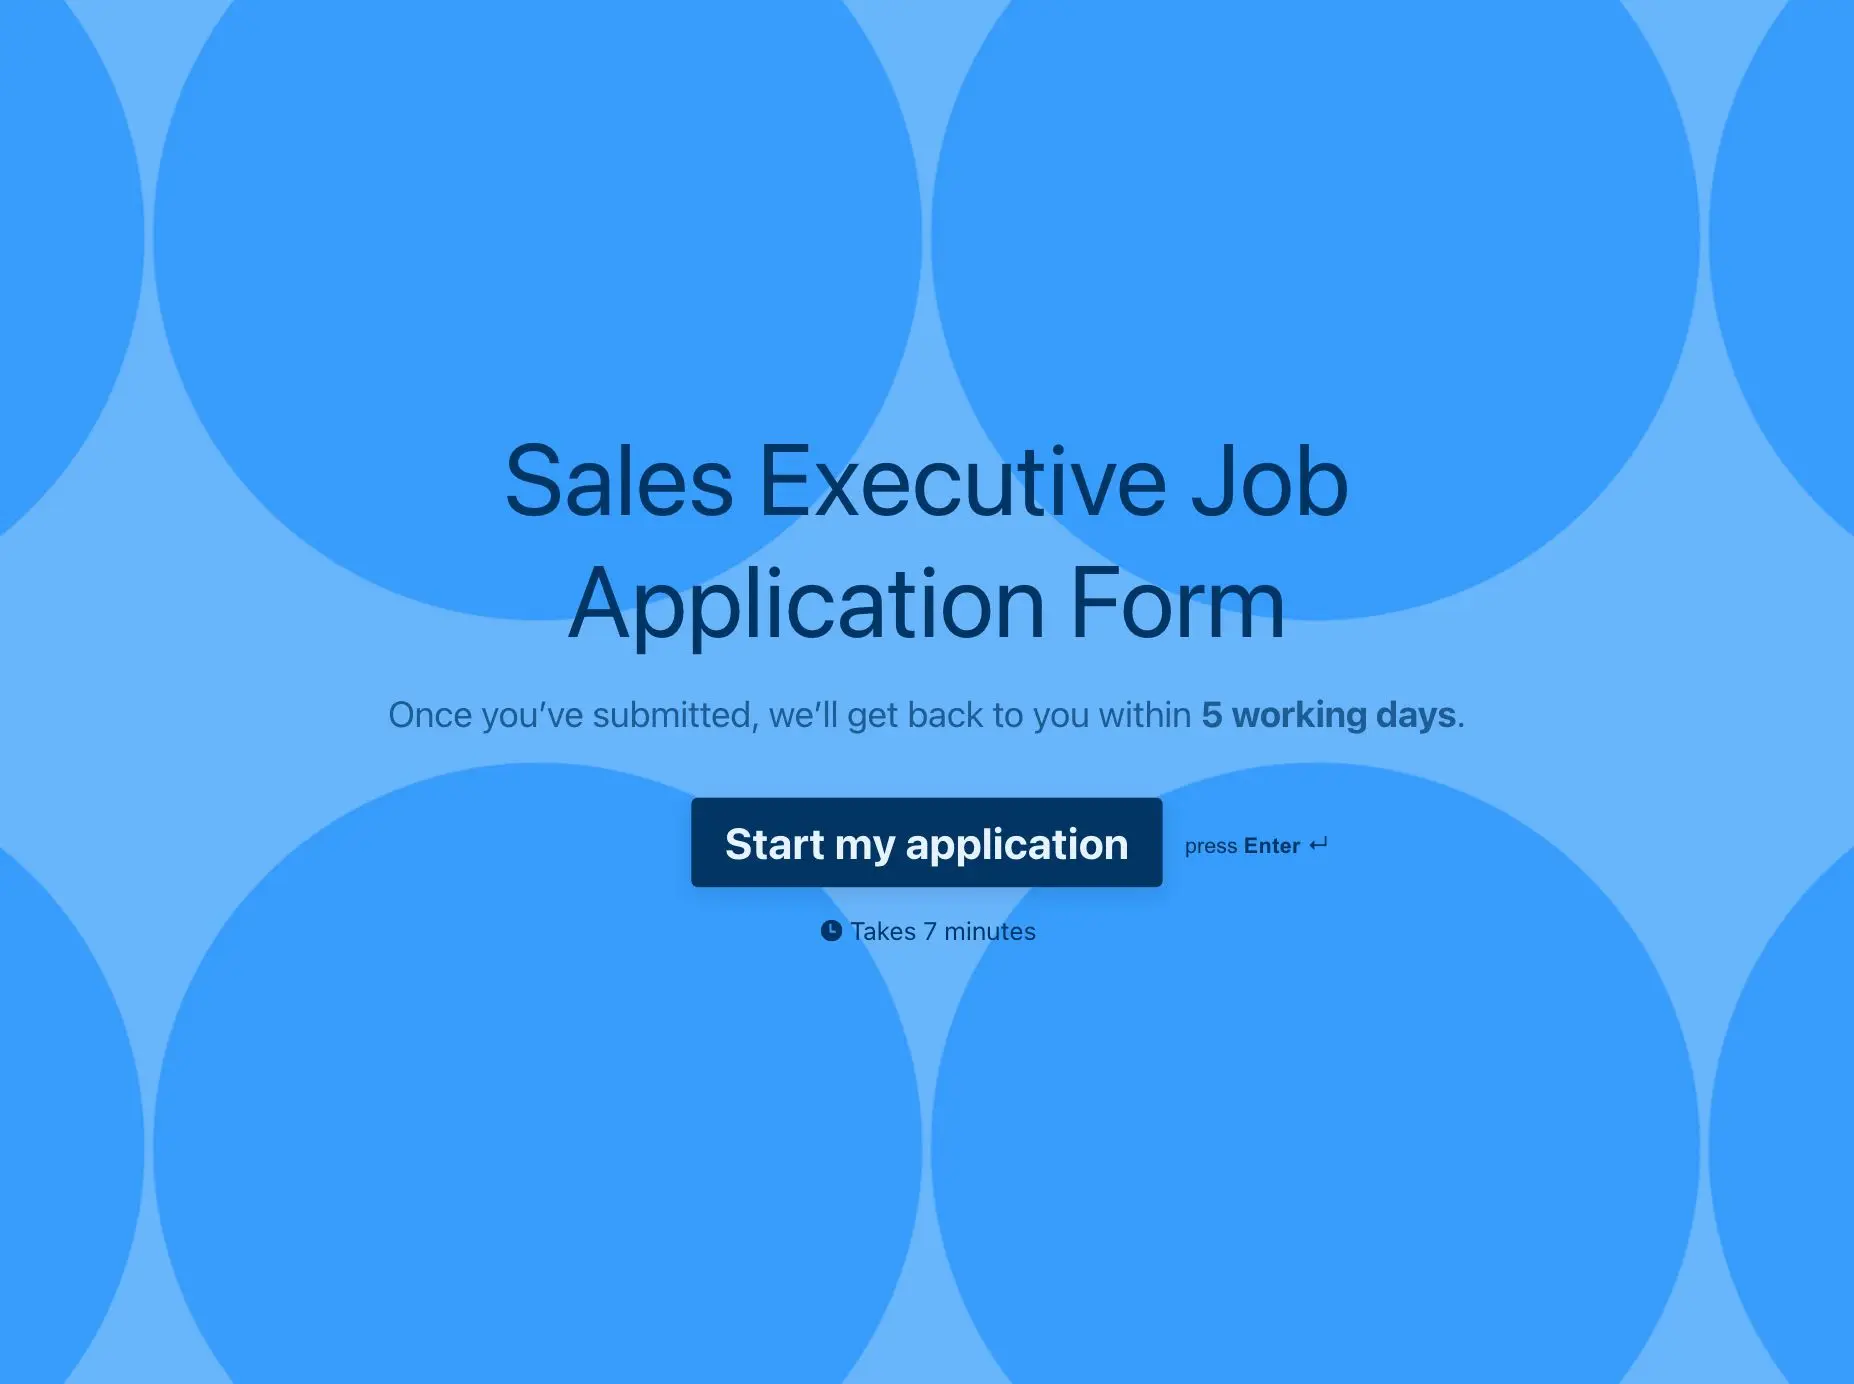 Sales Executive Job Application Form Template Hero